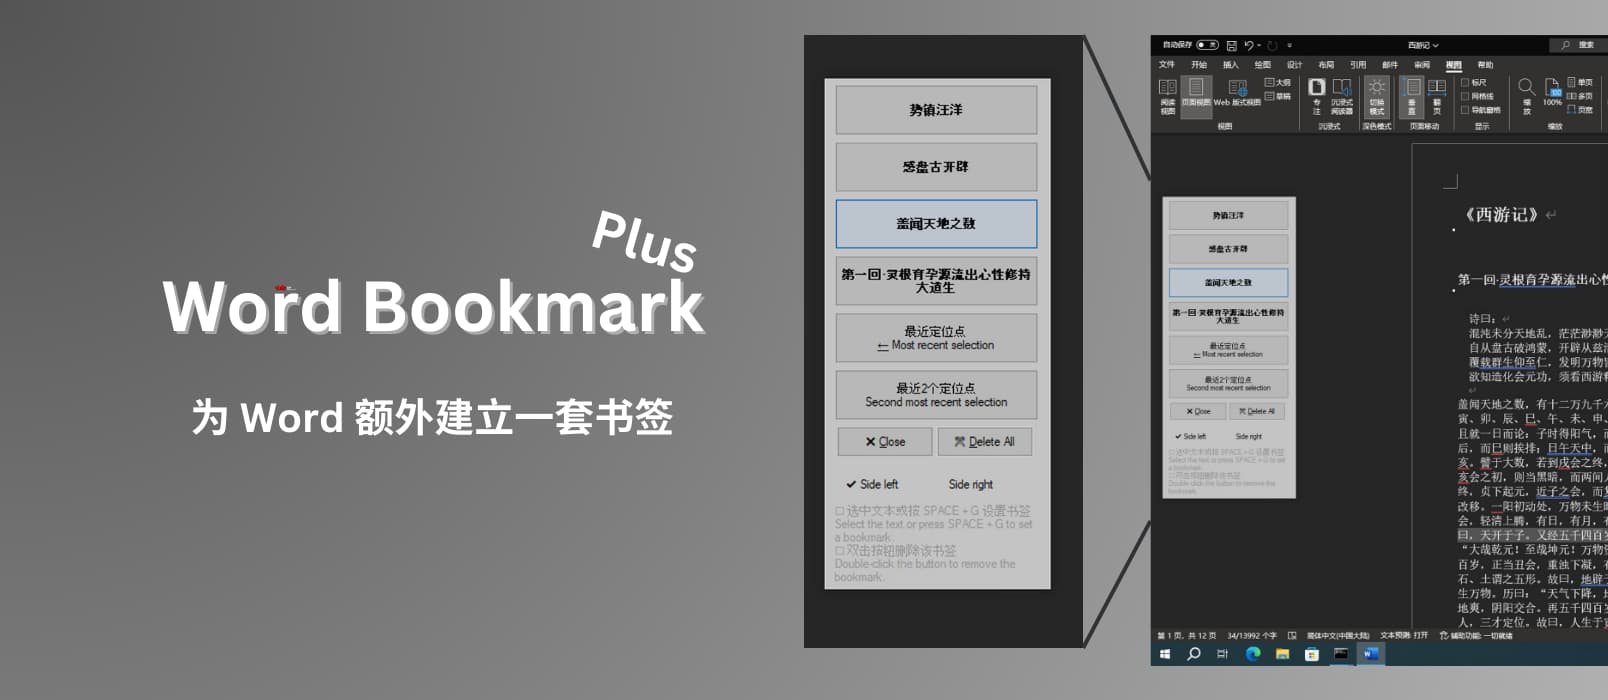 Word Bookmark Plus - 为 Word 额外建立书签，在文档内快速跳转[Windows]